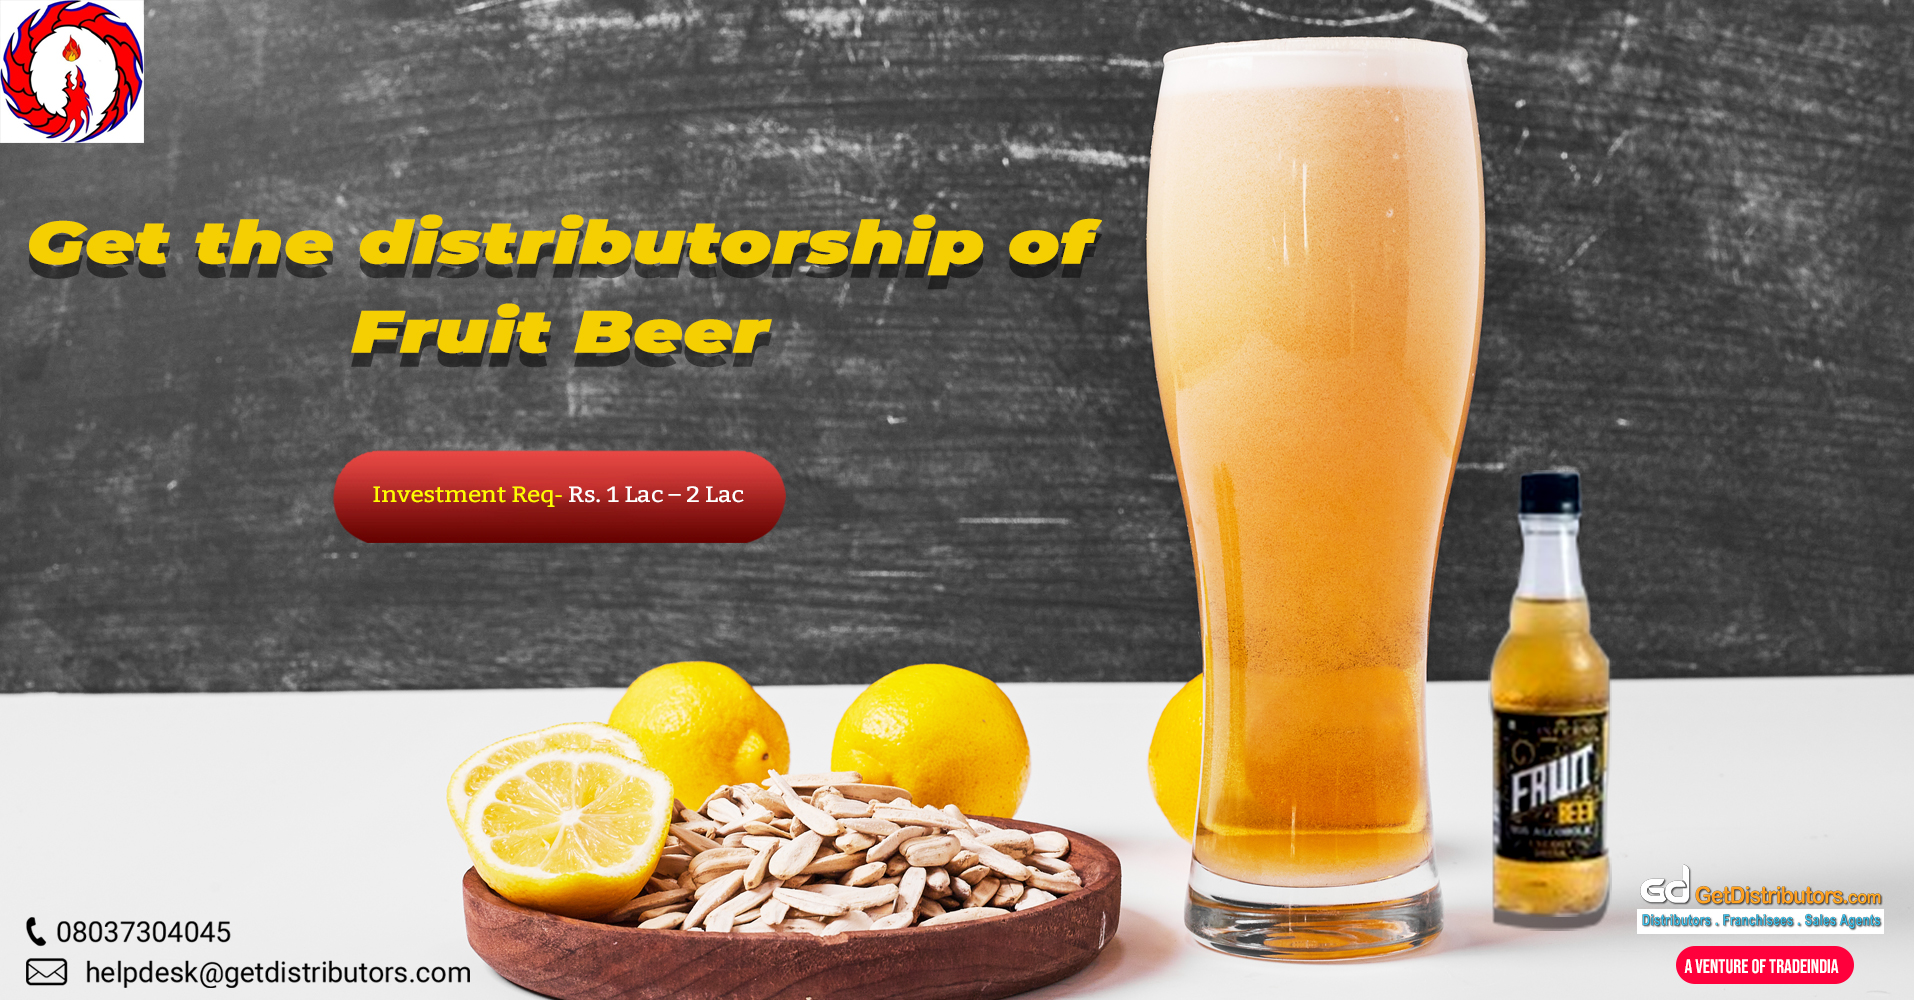 Inferno is offering distributorship of carbonated energy drink (fruit beer)